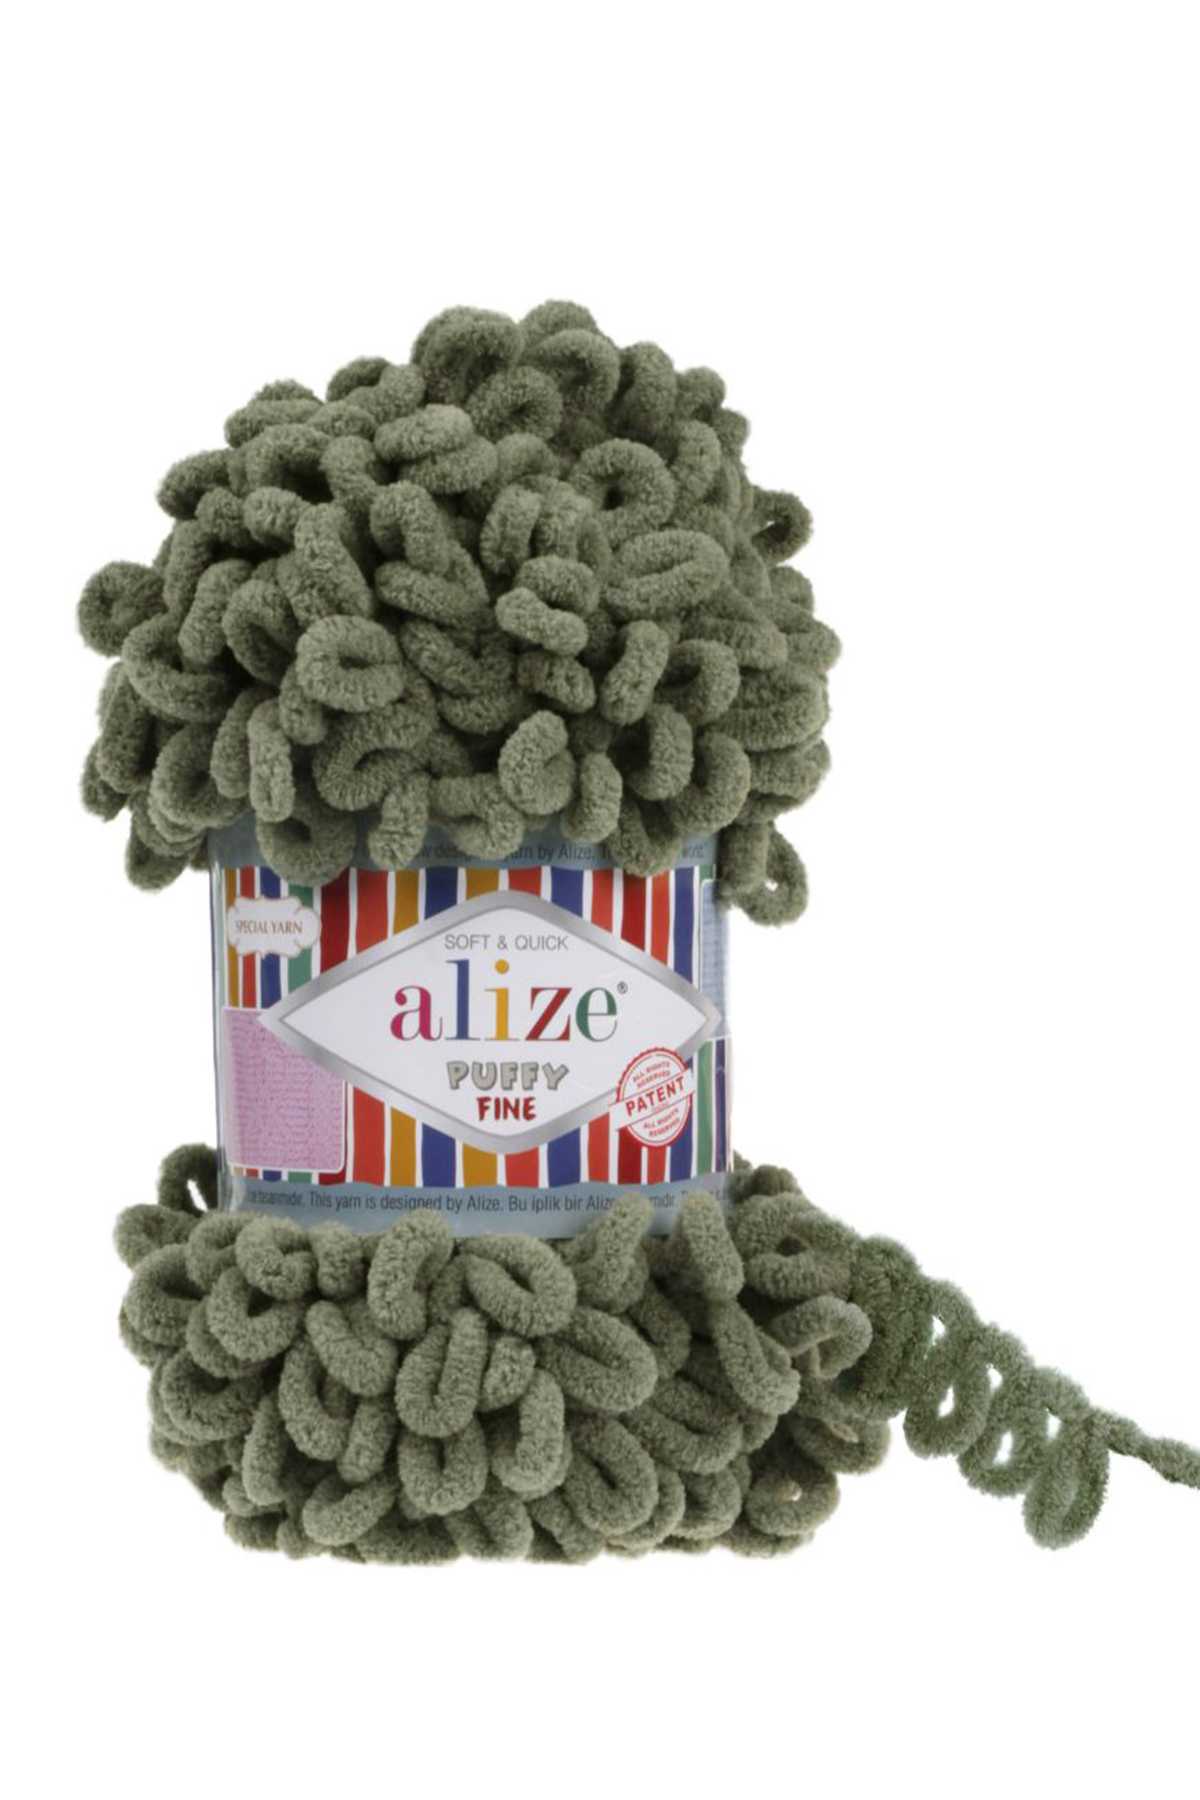 Alize Puffy Fine Micropolyester Yarn